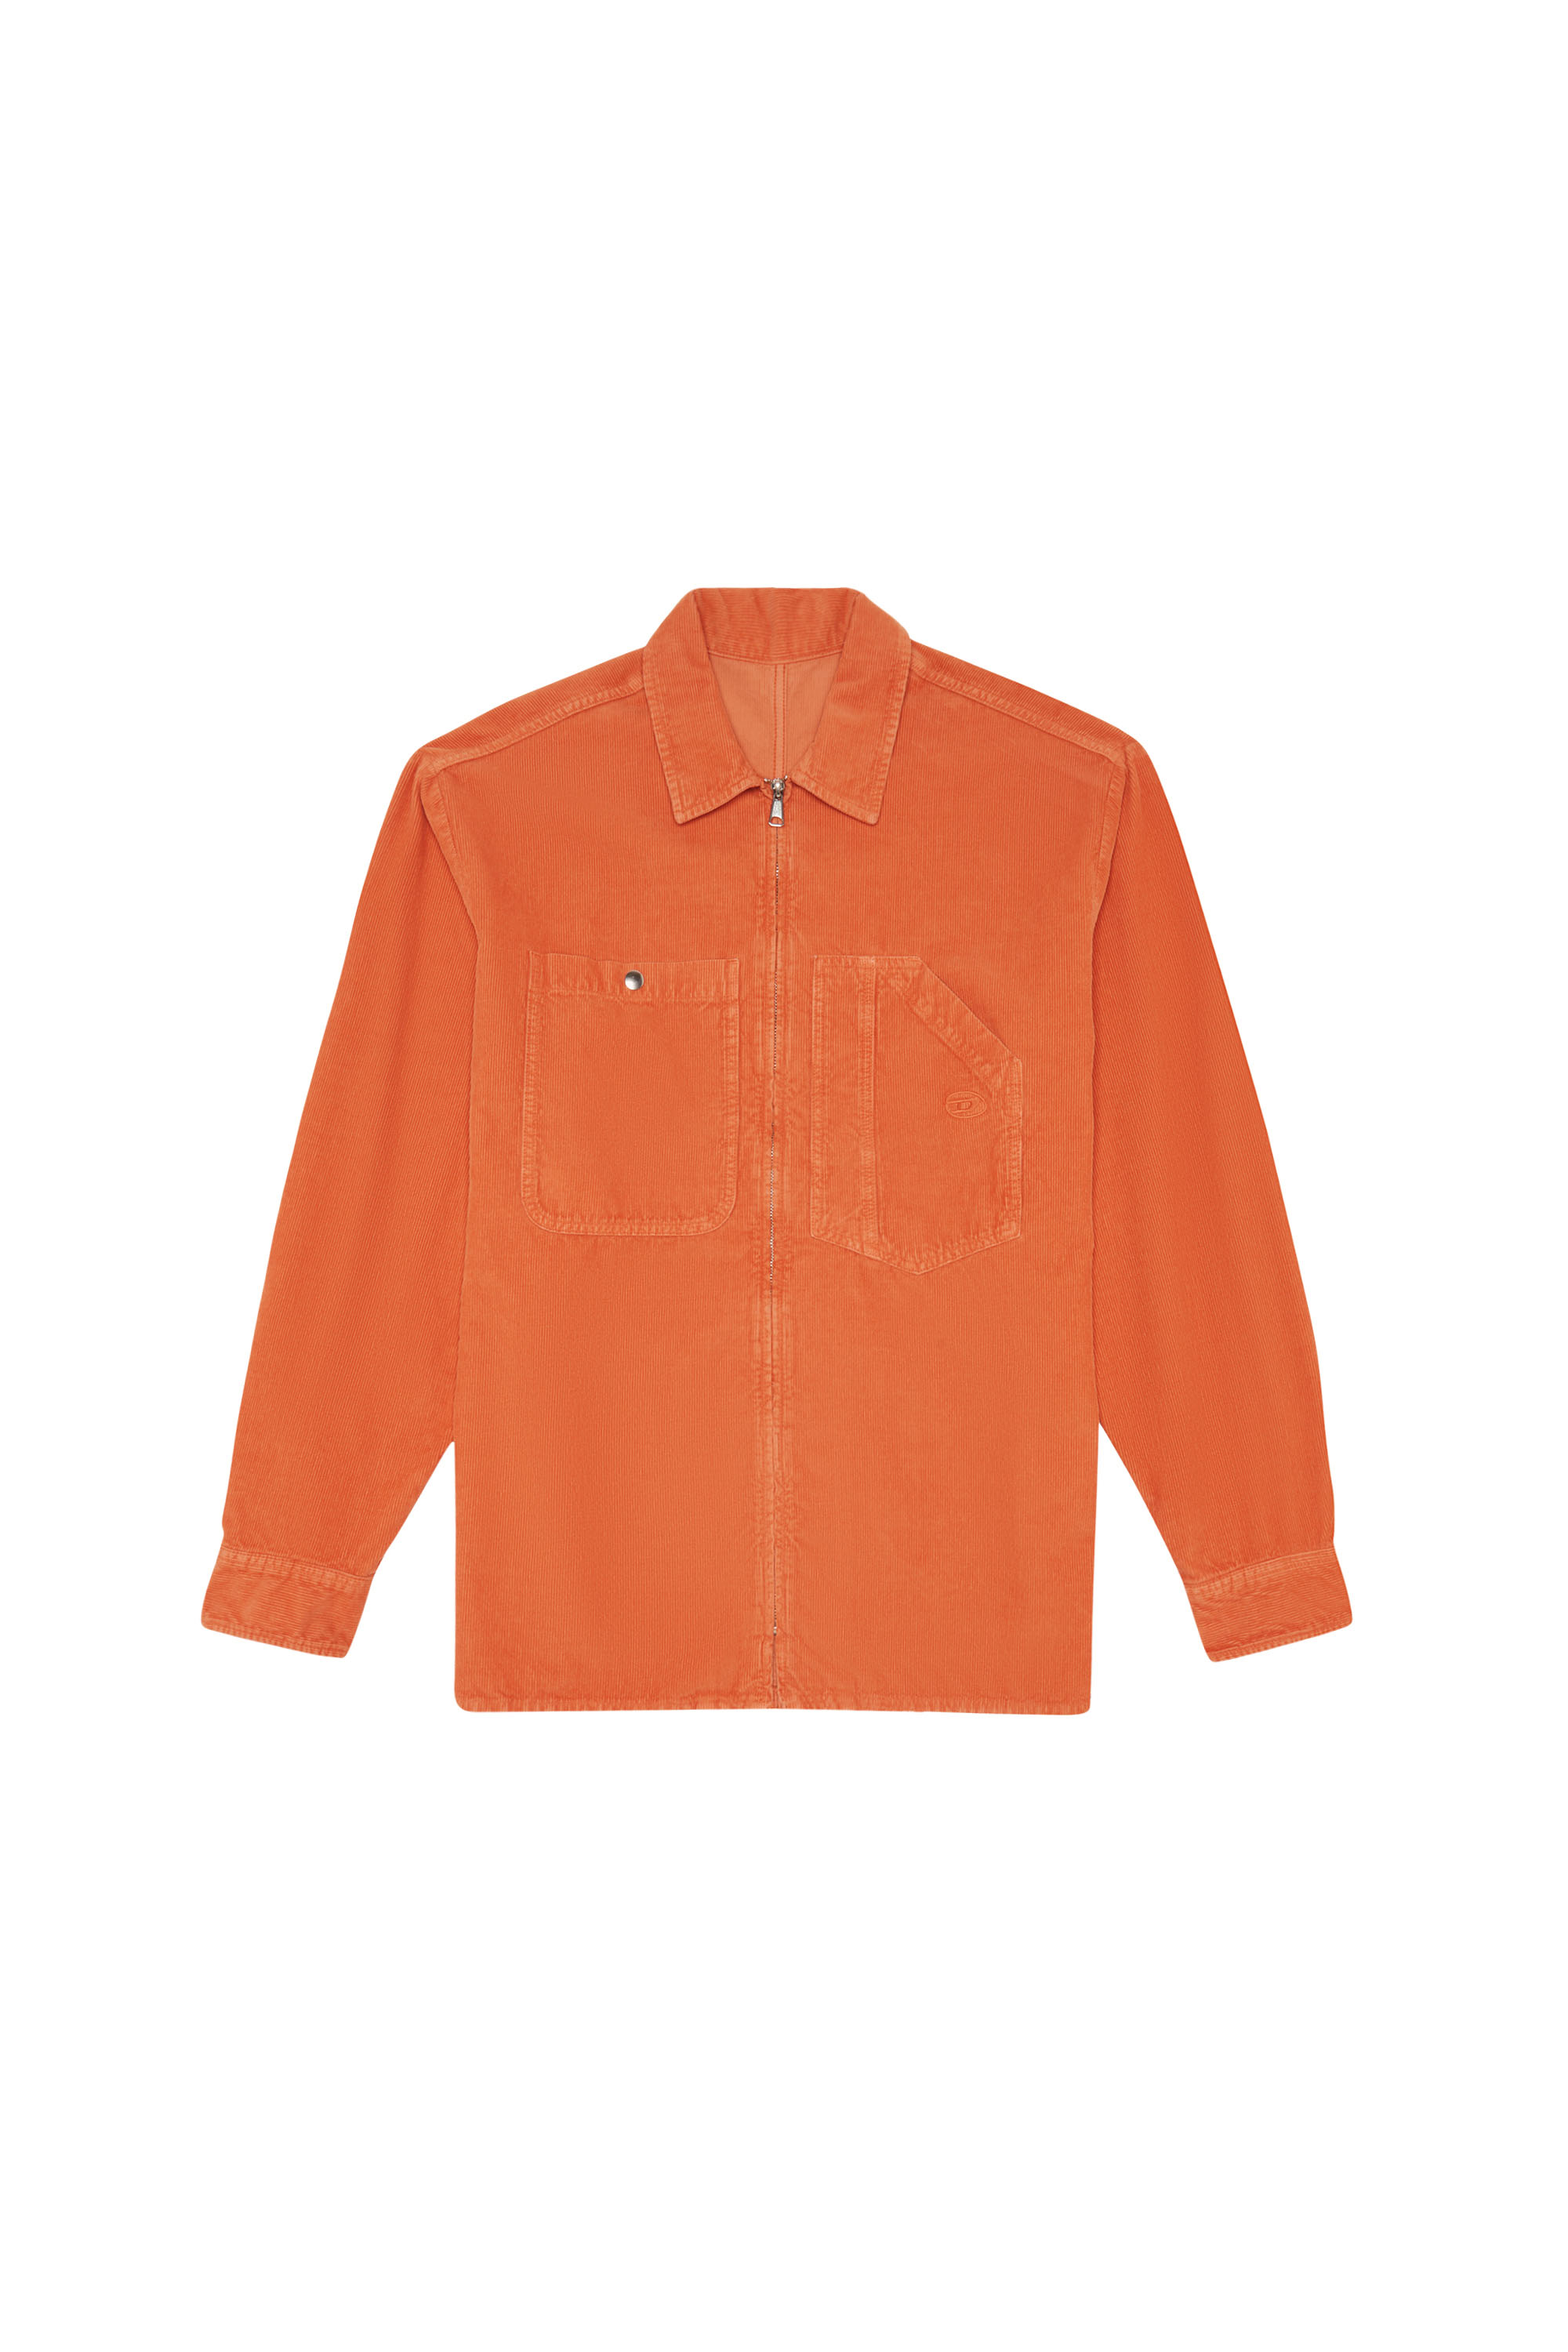 S-LYNE, Orange - Shirts